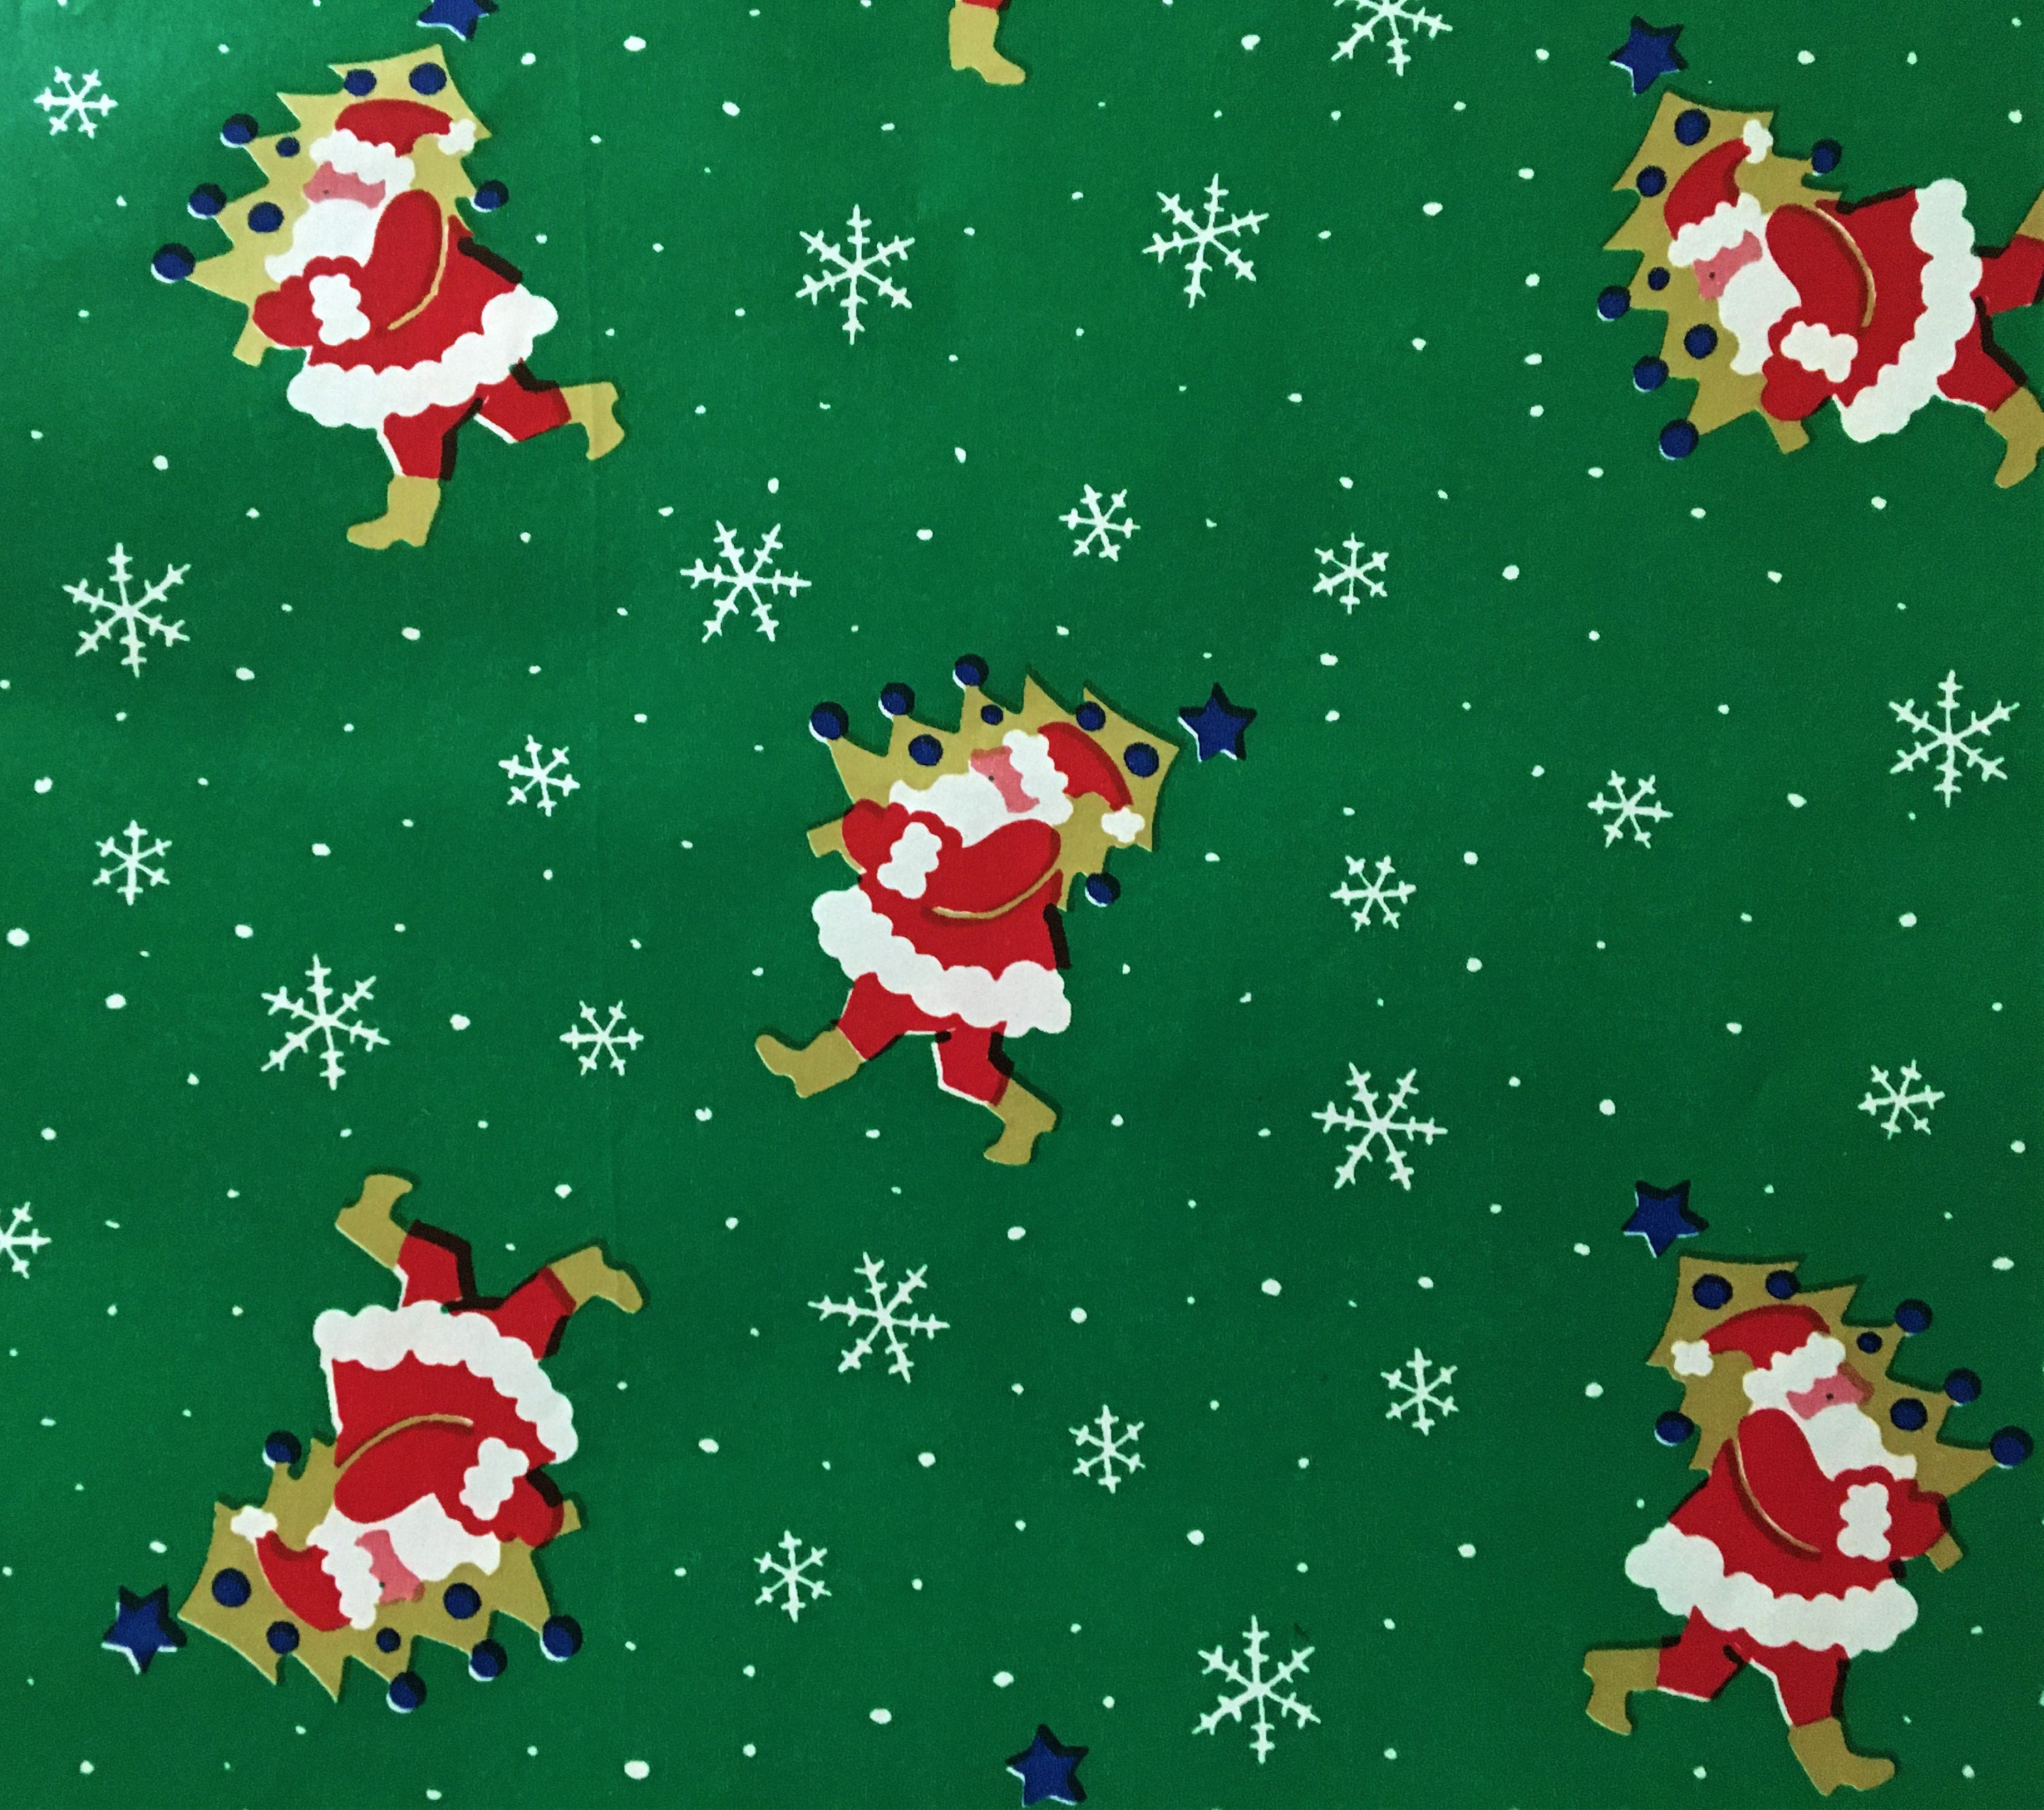 Santa Wrapping Paper  Vintage Christmas Gift Wrap - Waterleaf Paper -  Waterleaf Paper Company